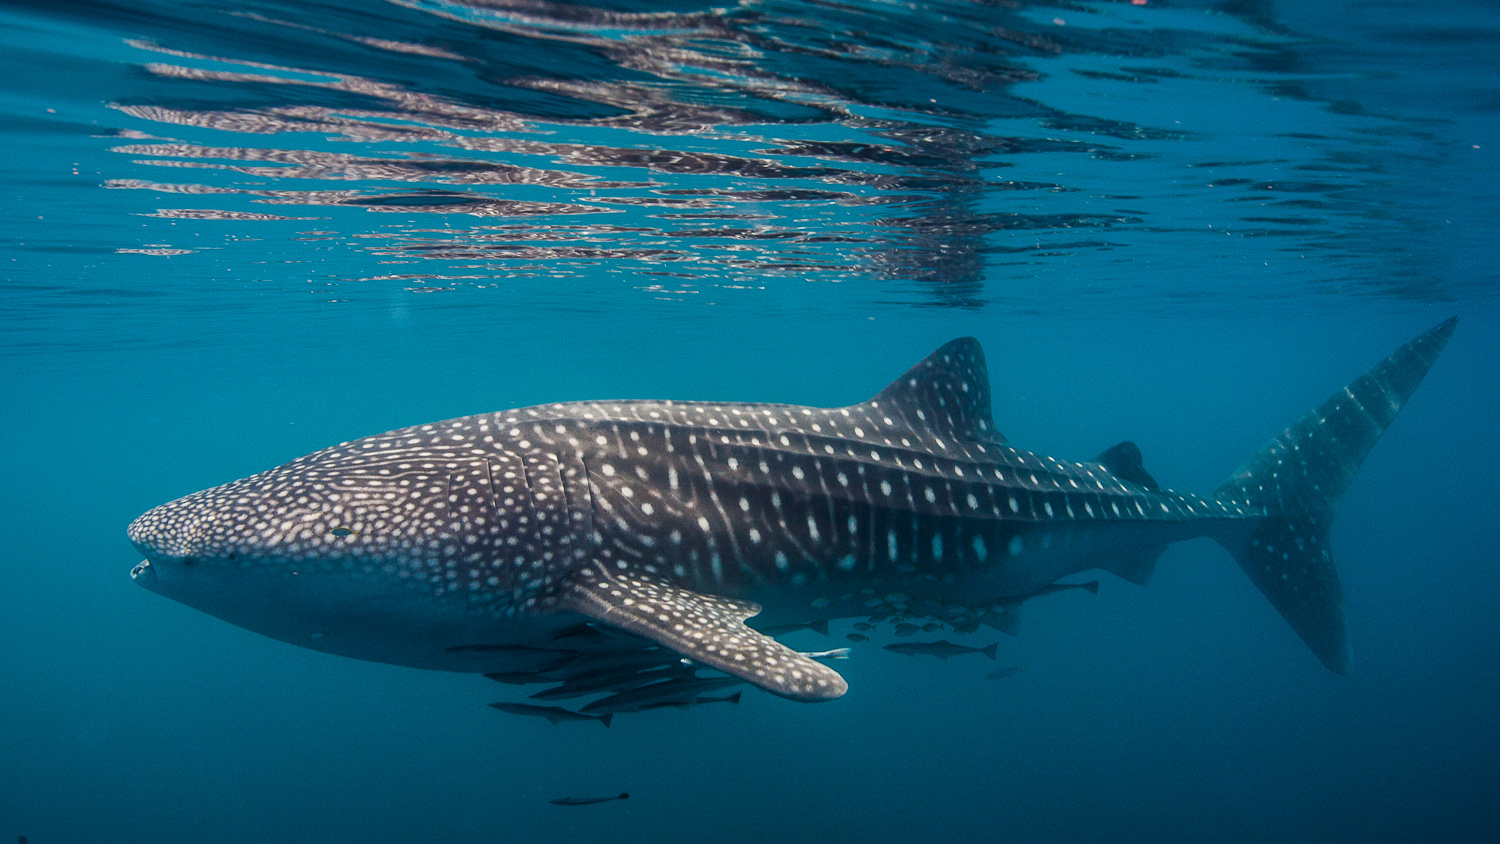 Tubarao baleia / Whale shark / Rhincodon typus